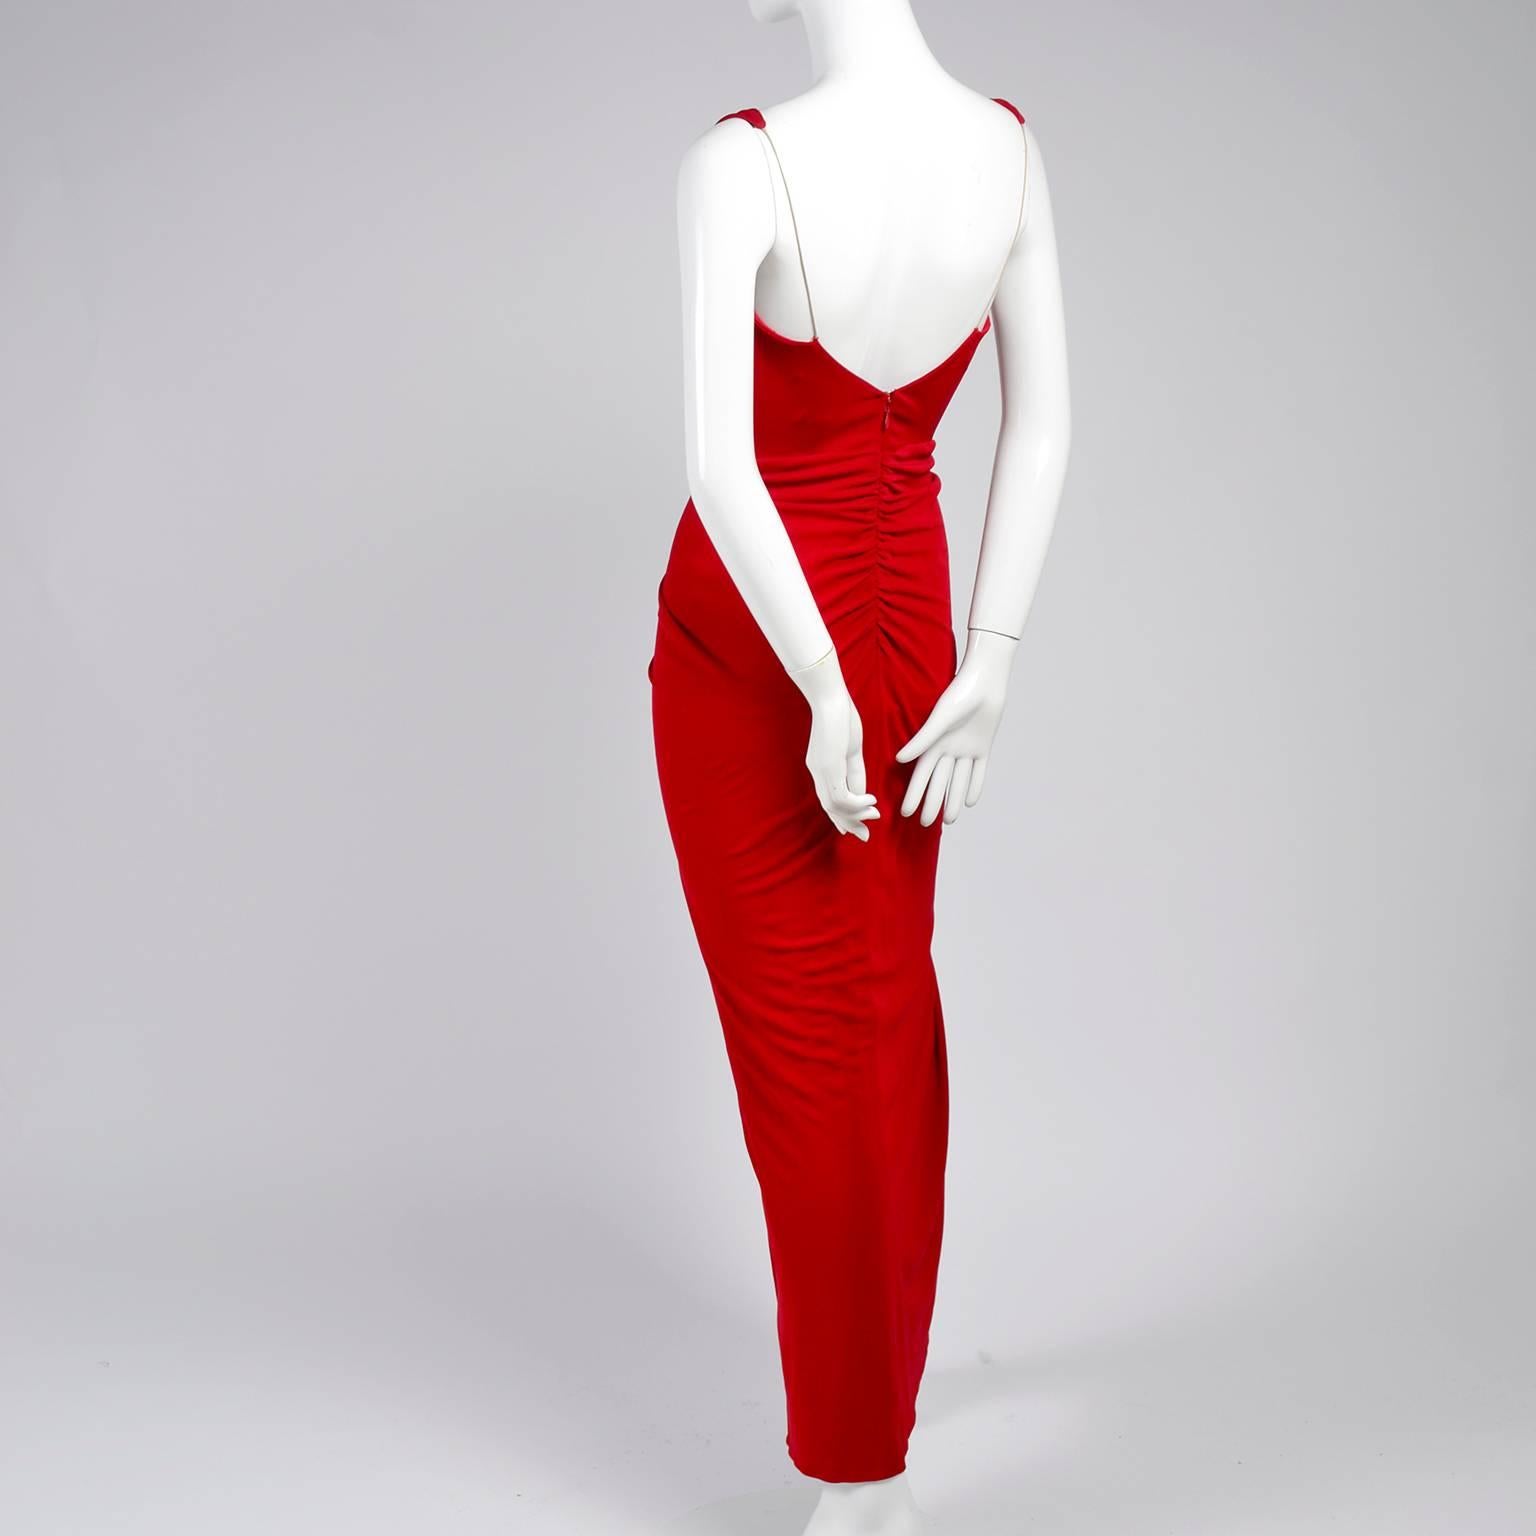 Women's 1990s Randolph Duke Red Dress Draped Body Hugging Jersey Vintage Evening Gown